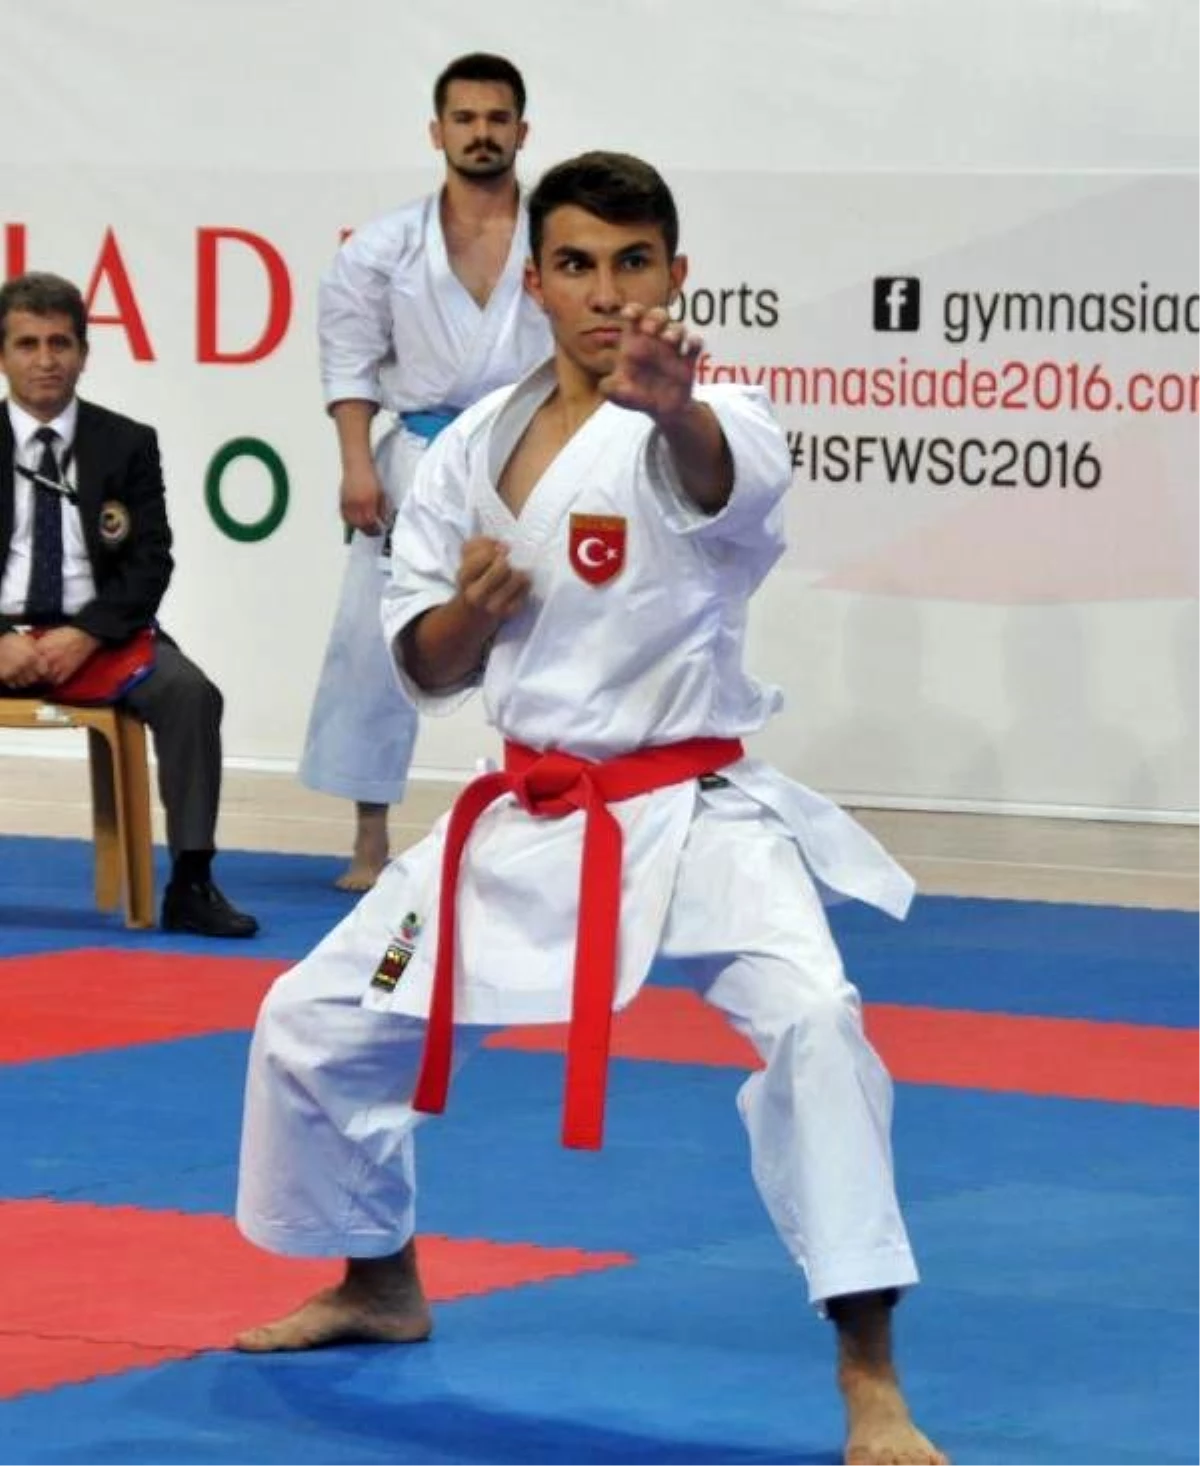 Trabzon\'da Gymnasiade 2016\'da Karate\'de Türkiye Damgası